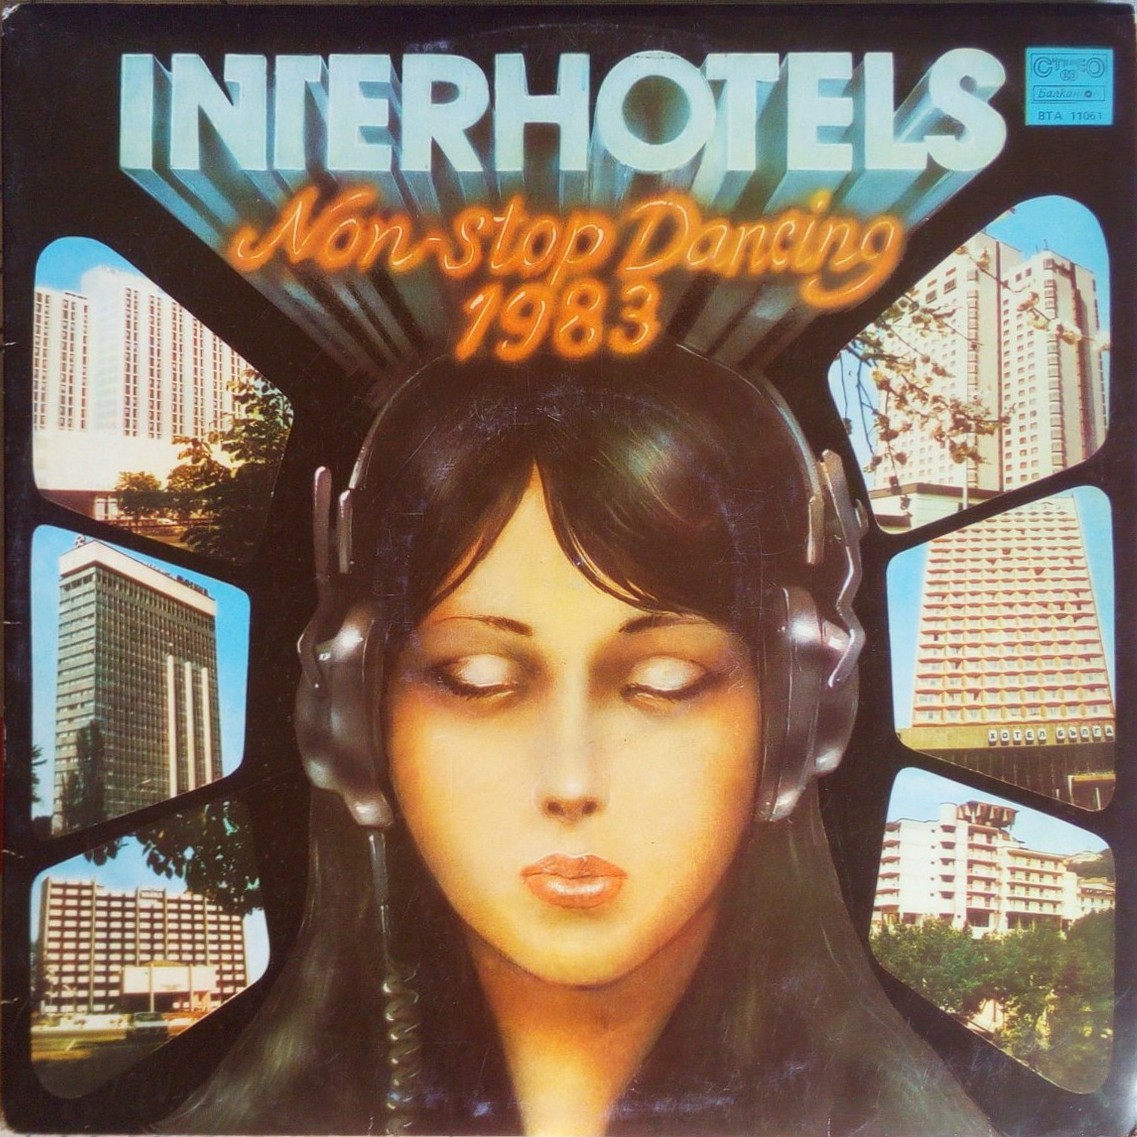 Interhotels. Non stop dancing 1983